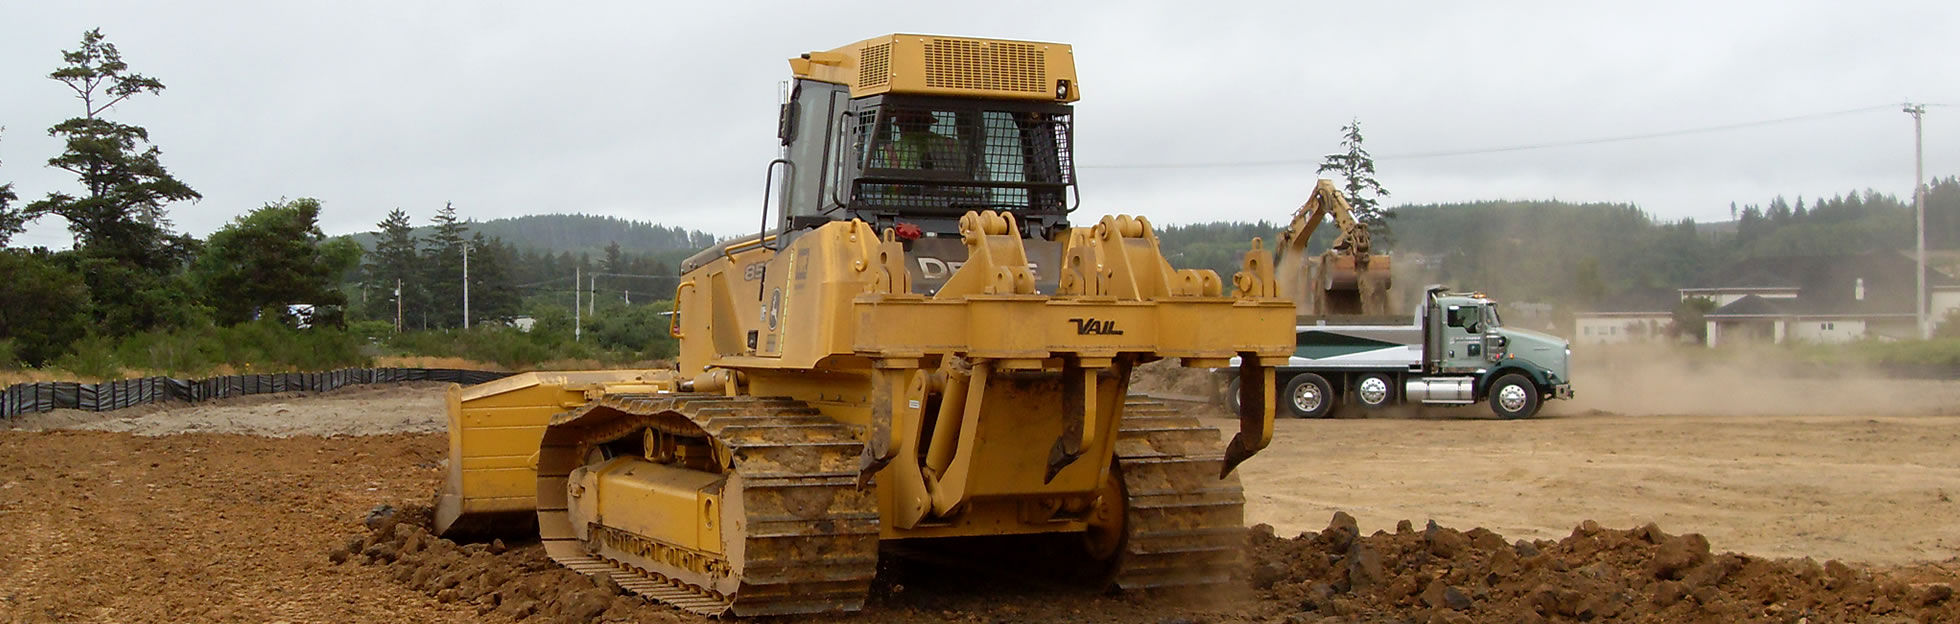 bulldozer pushing dirt on construction site